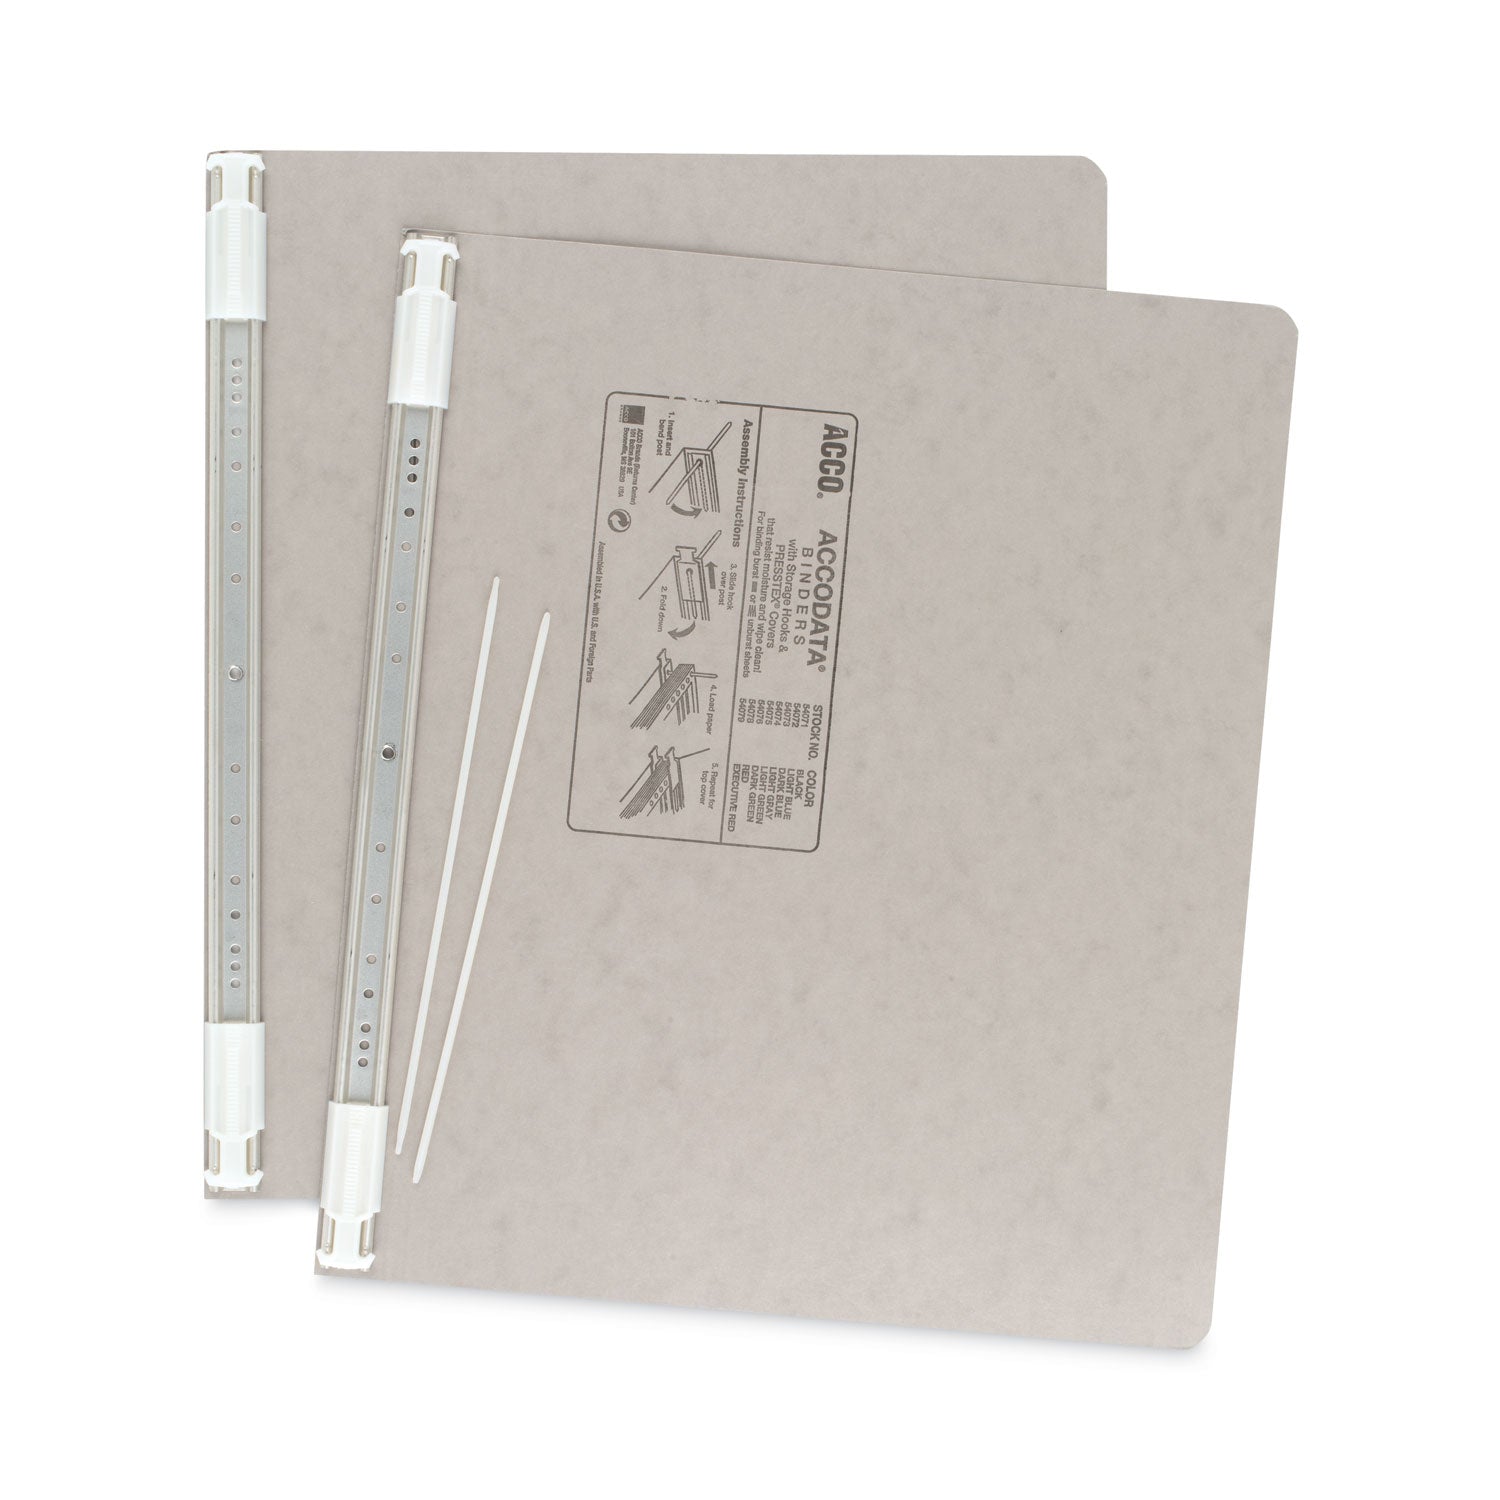 PRESSTEX Covers with Storage Hooks, 2 Posts, 6" Capacity, 14.88 x 11, Light Gray - 